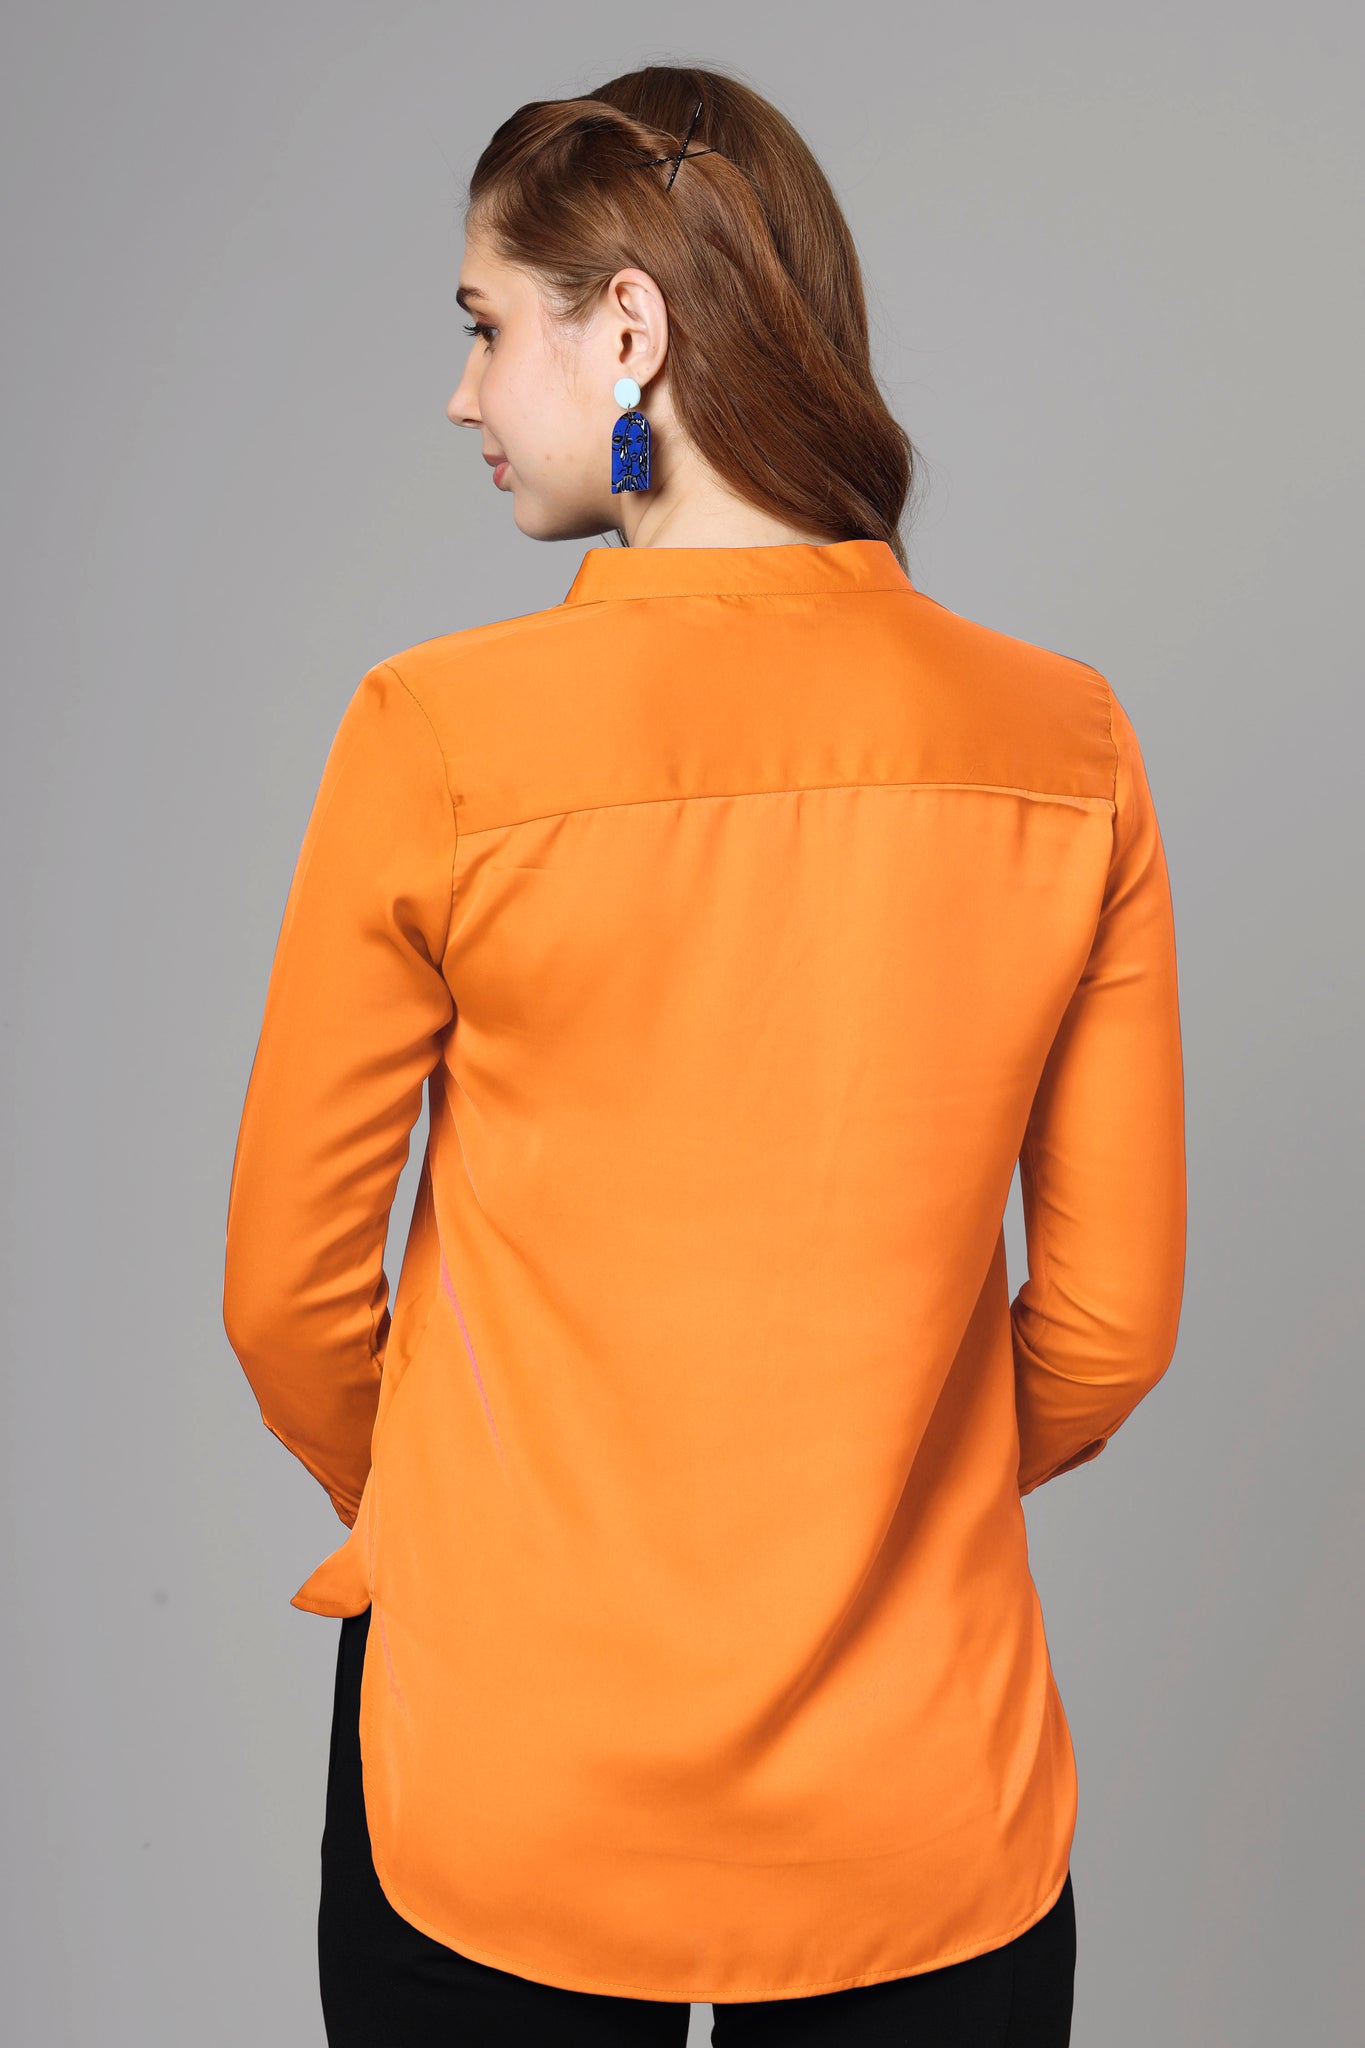 Classic Orange Top For Women